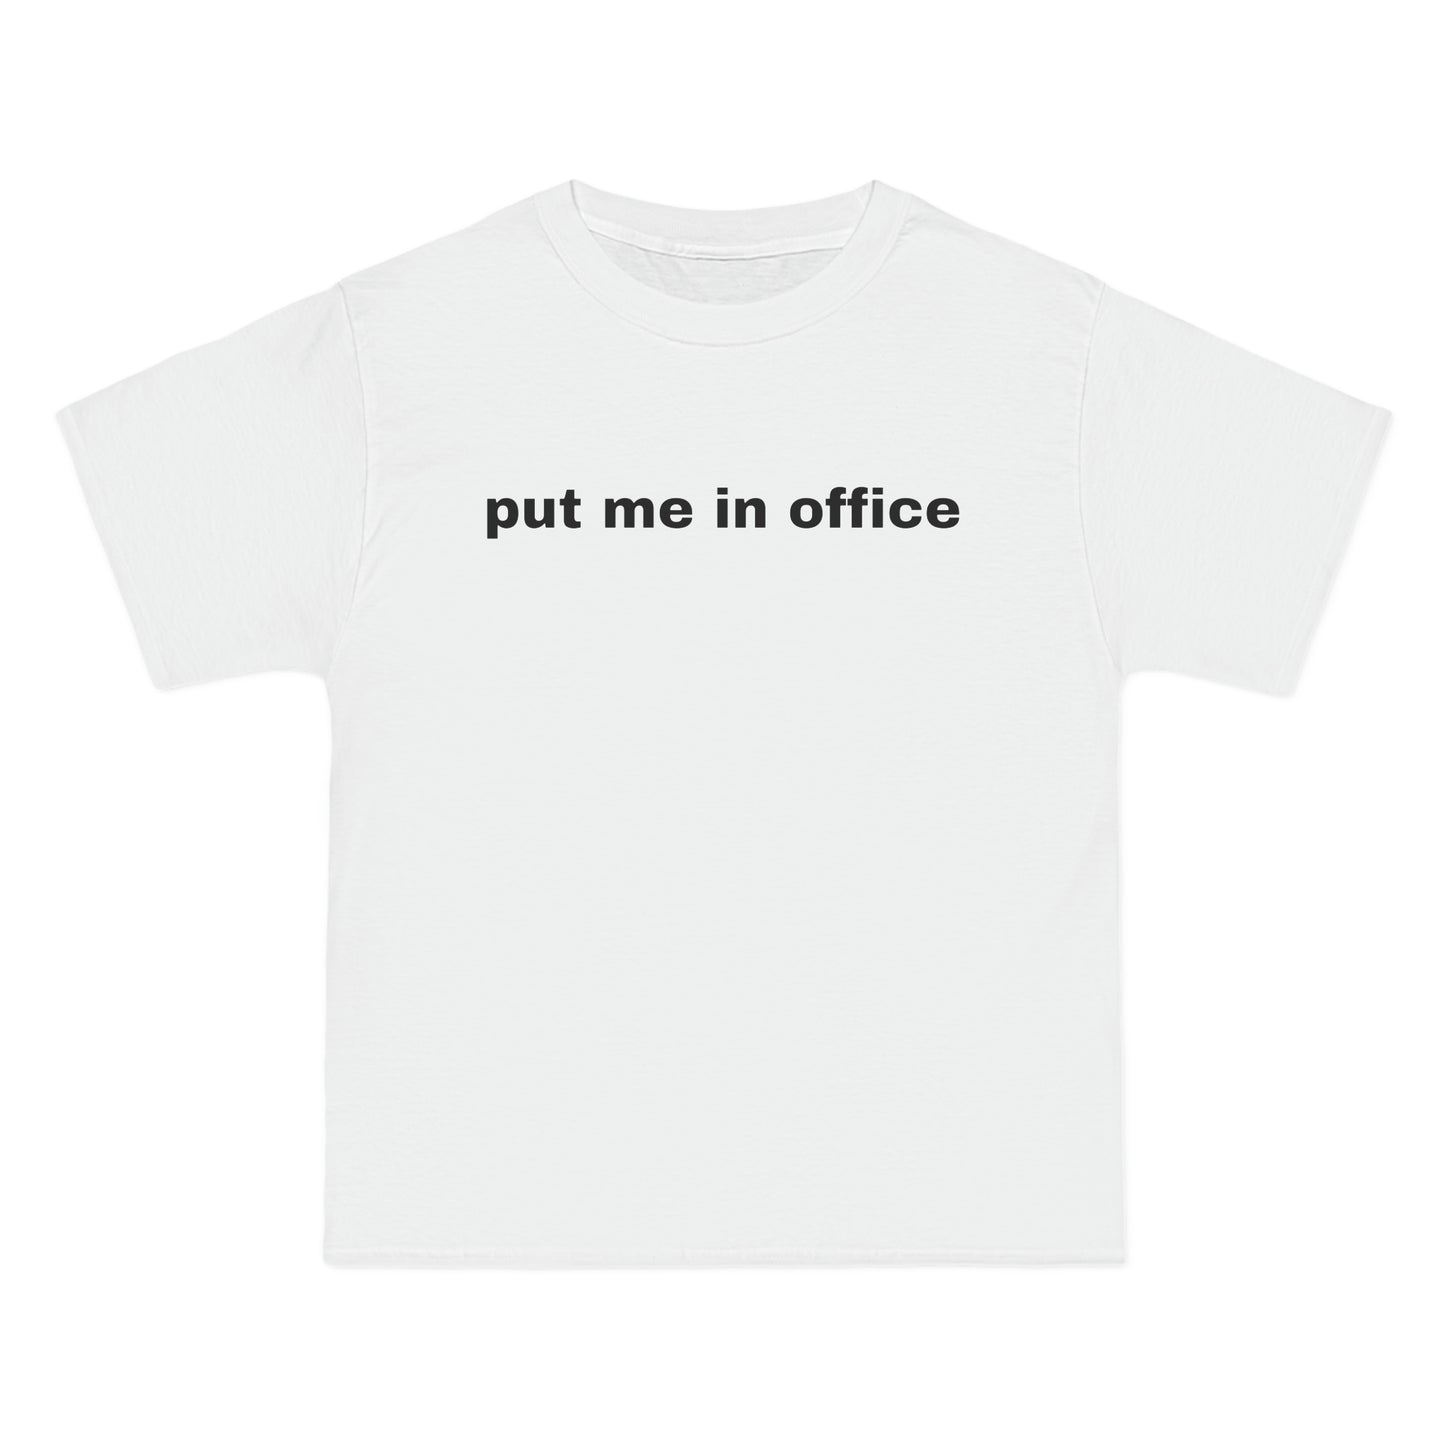 put me in office Tee